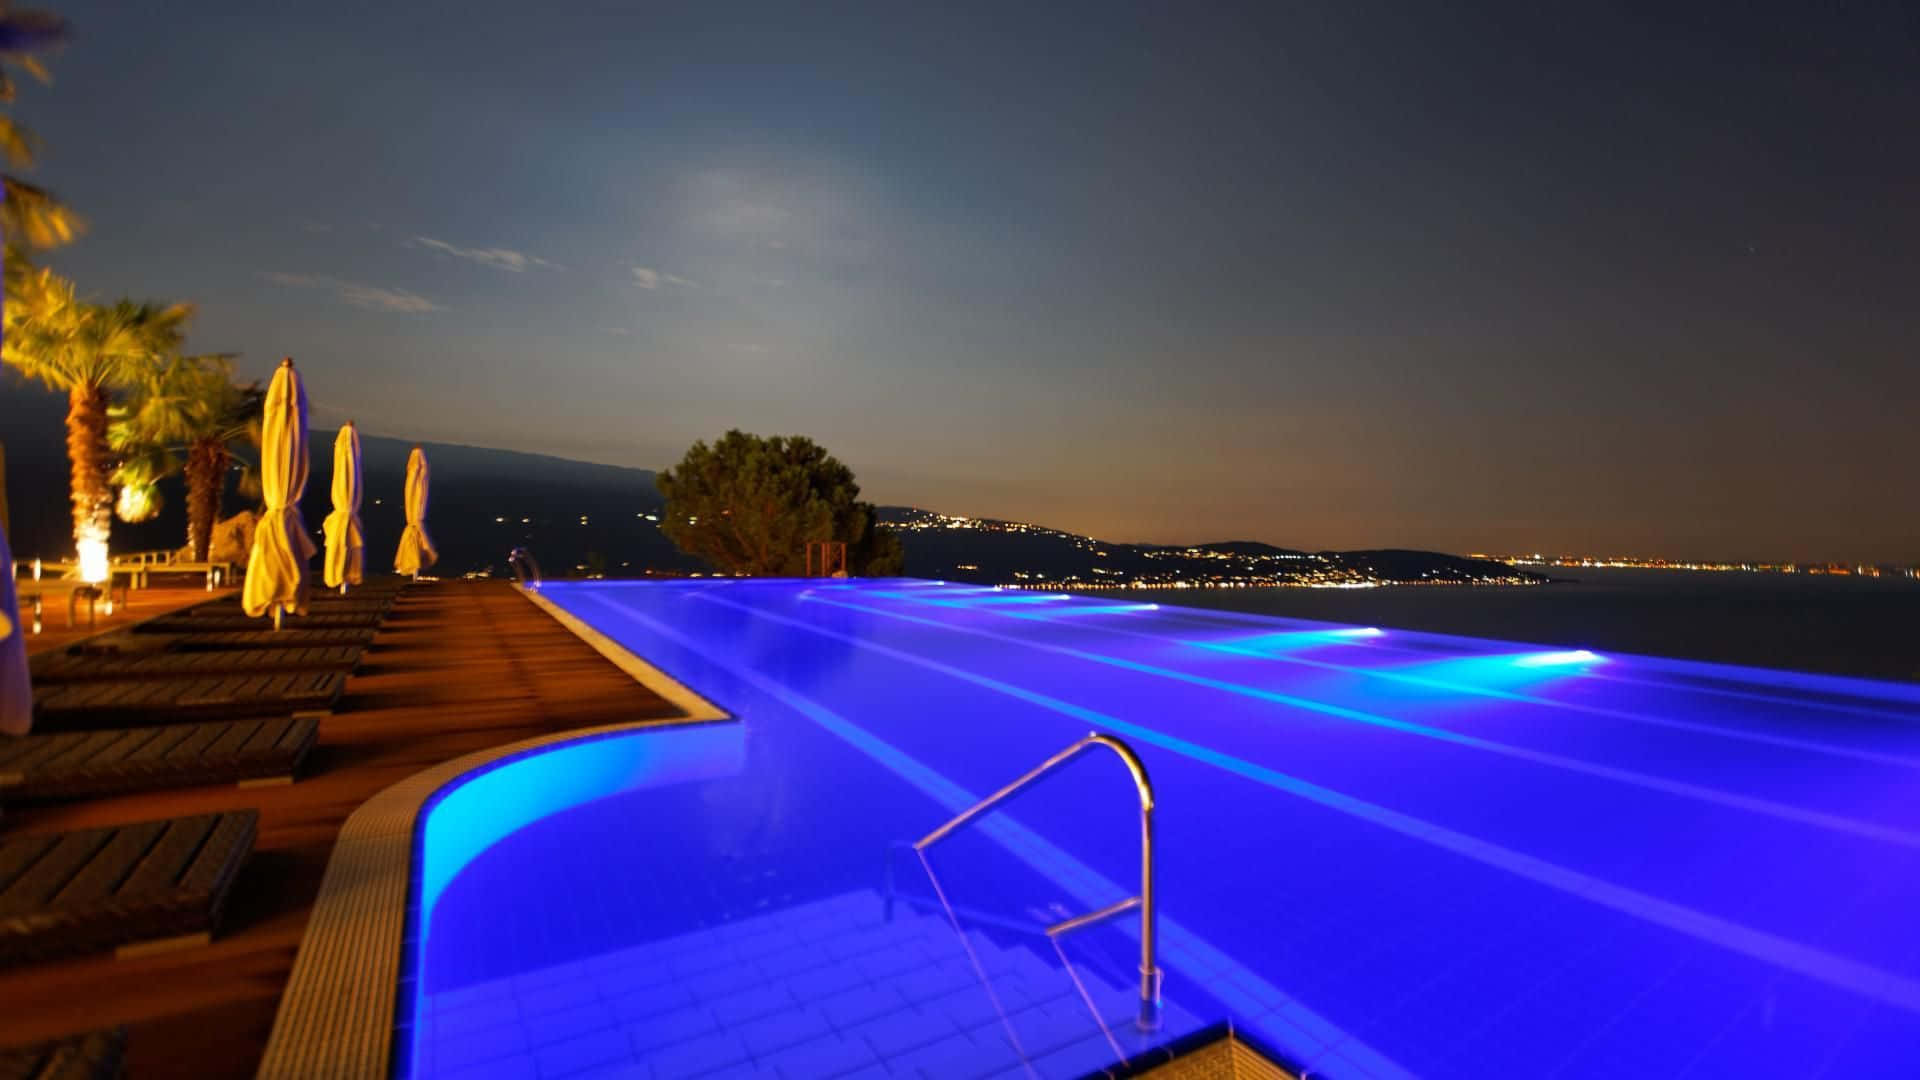 Stunning swimming pool at luxury resort